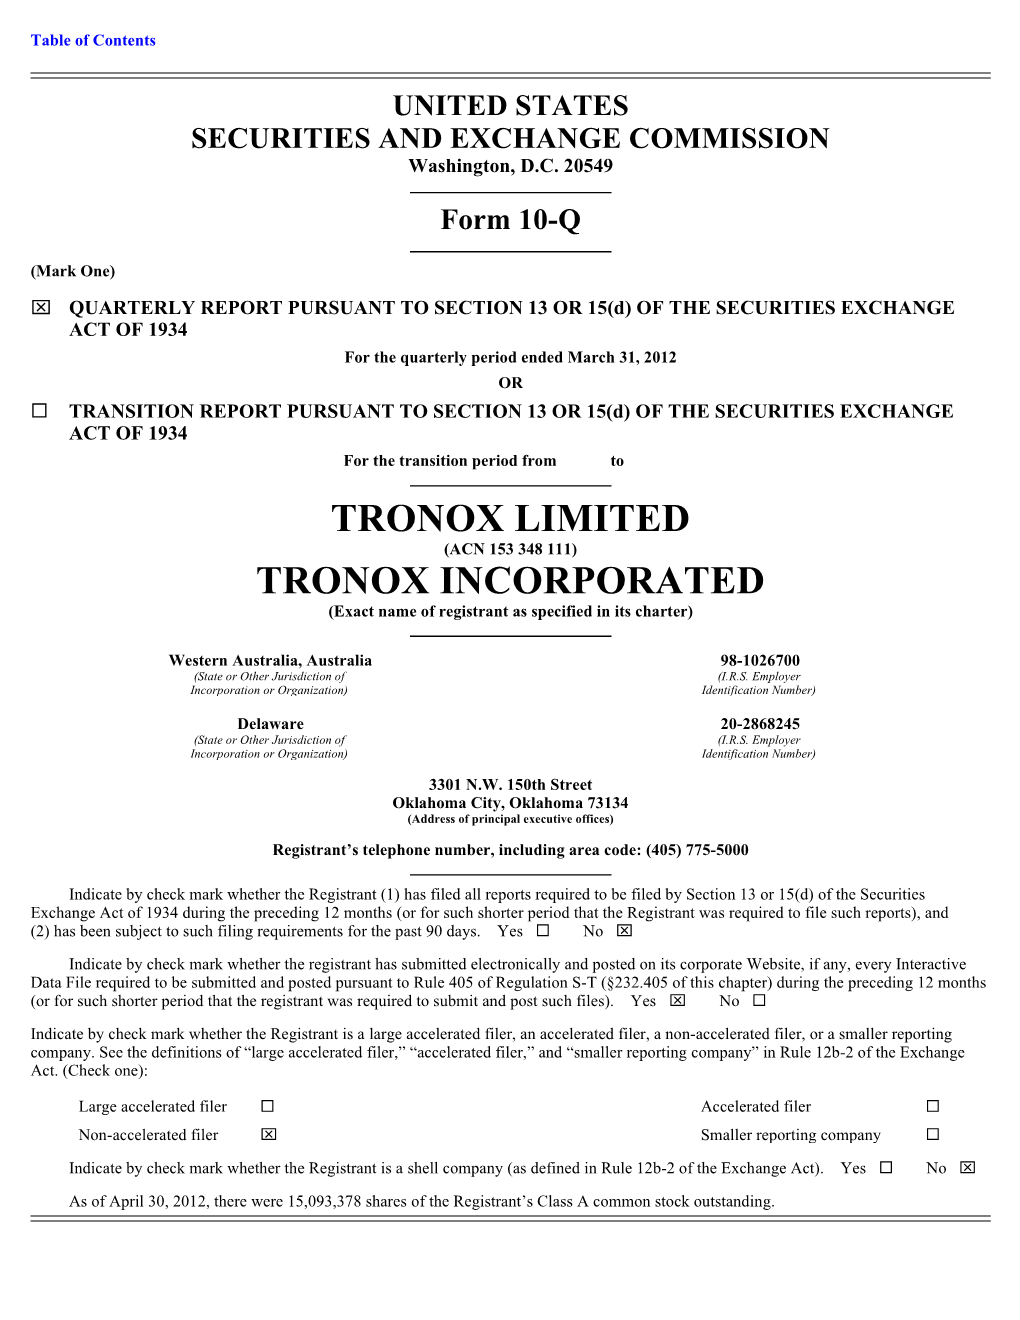 Tronox Limited Tronox Incorporated